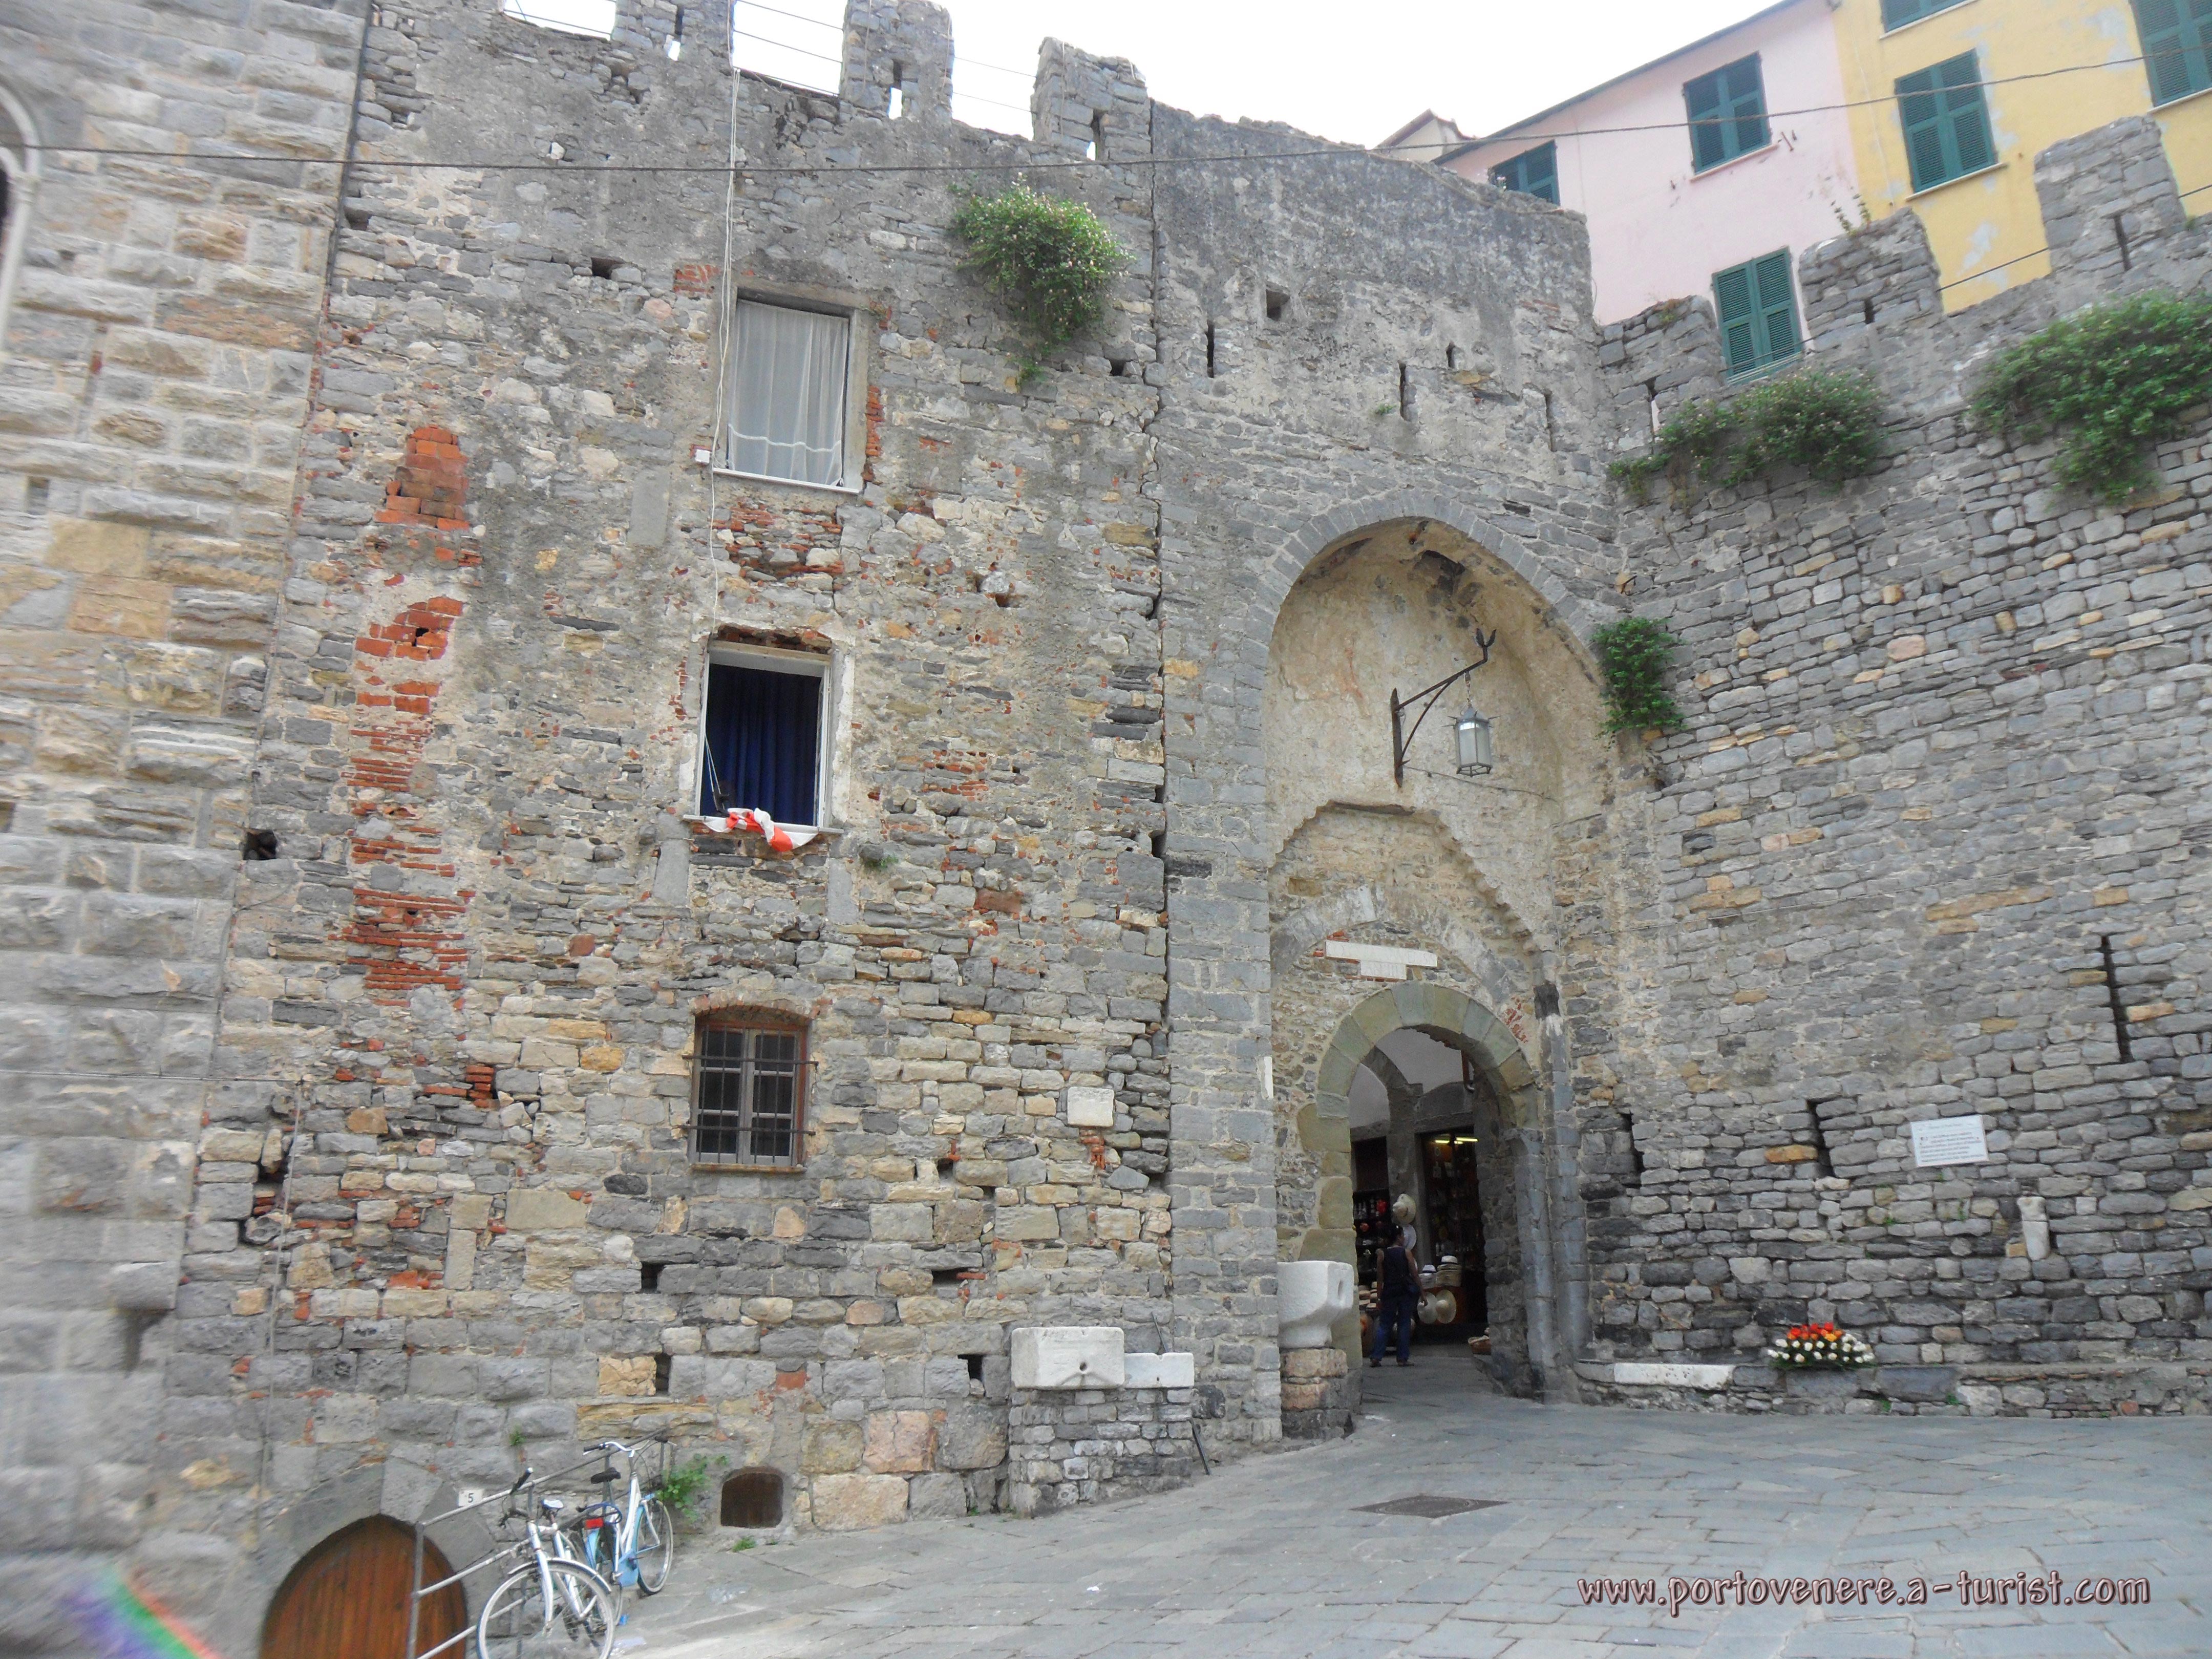 Portovenere - Porta del borgo<br>4320x3240, 2.06 MB